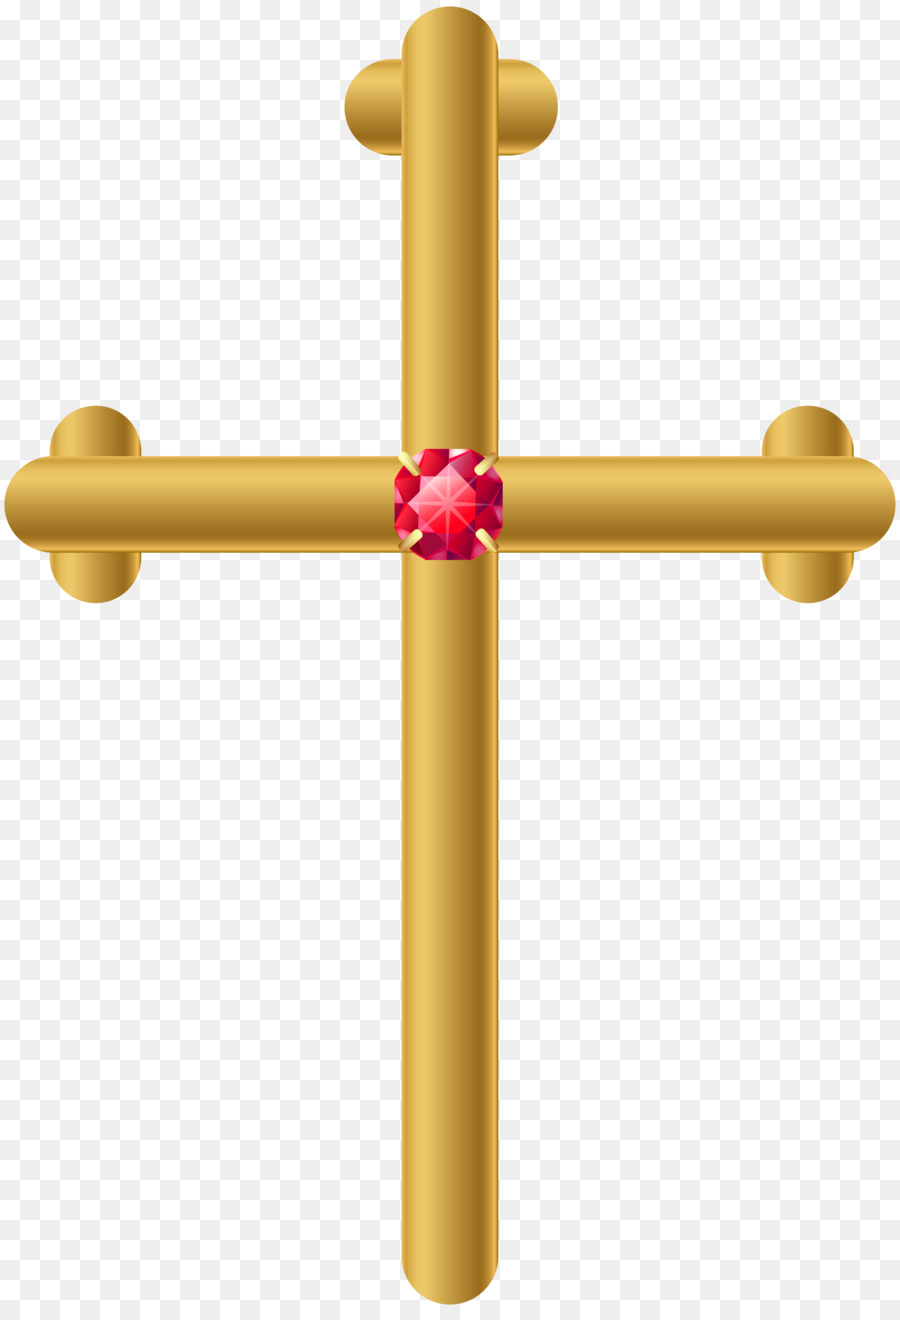 Christian cross Clip art - Easter cross png download - 5492*8000 - Free Transparent Cross png Download.